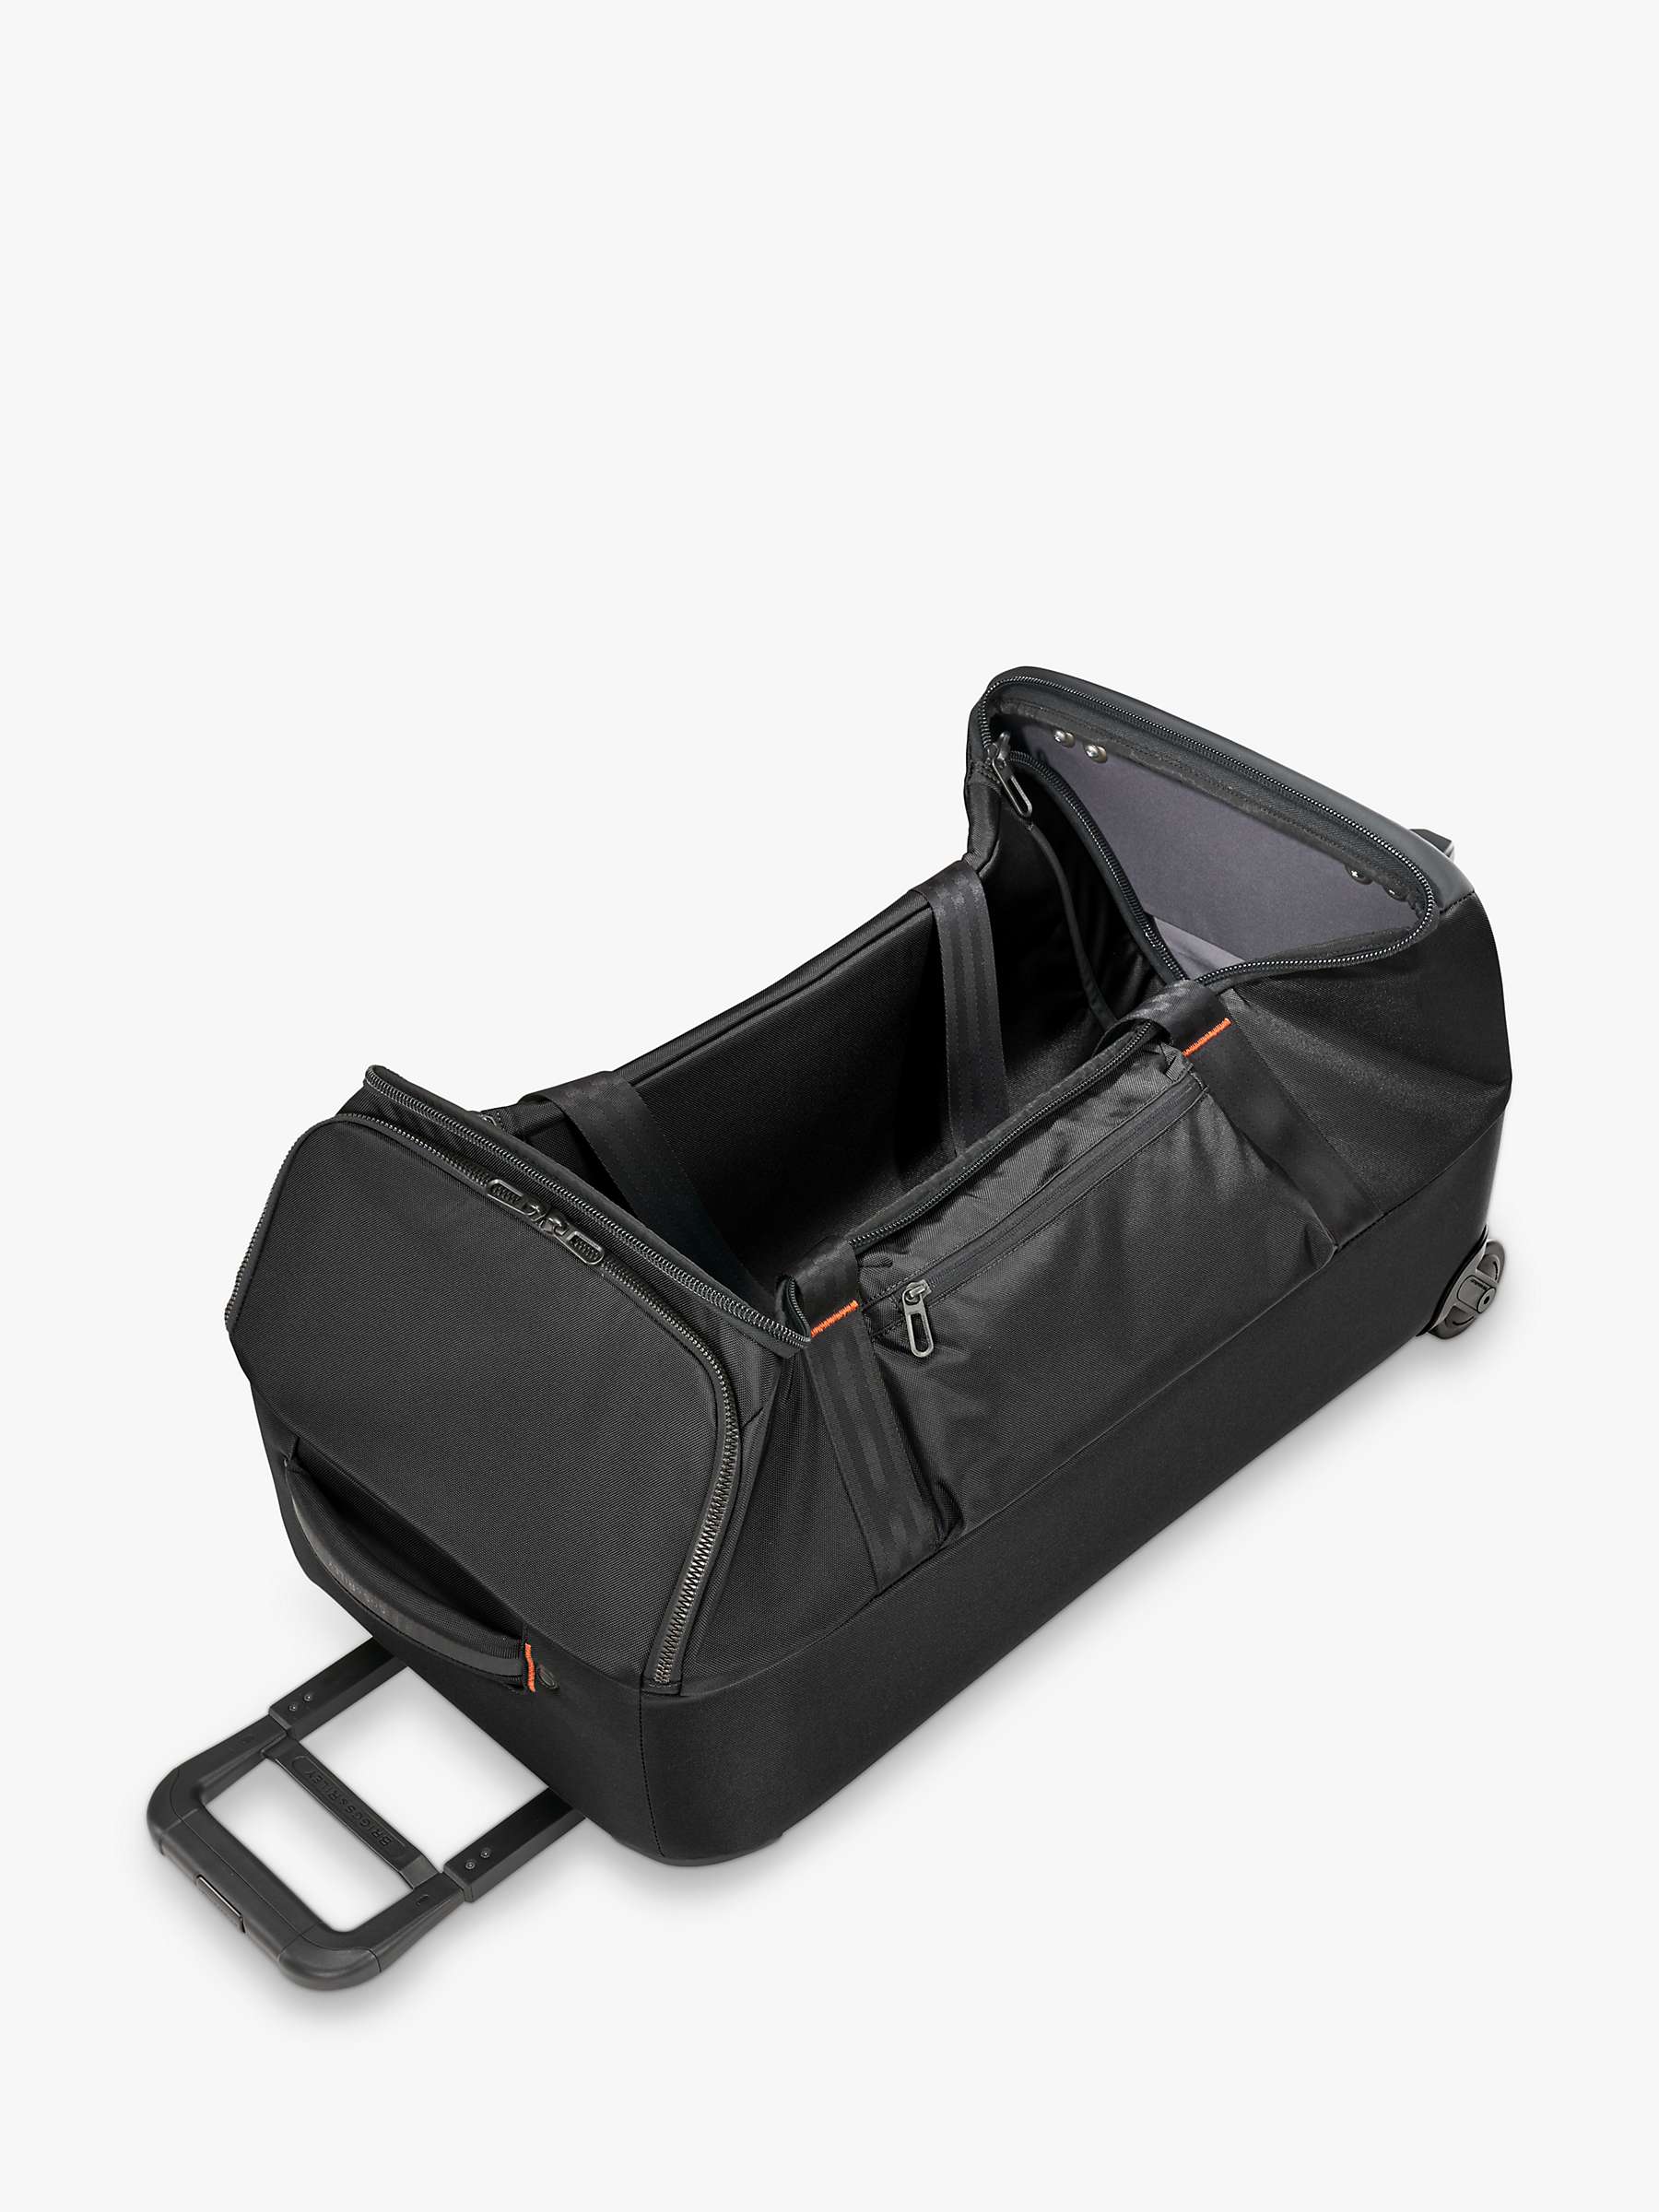 Buy Briggs & Riley ZDX Medium Upright Duffle Bag, Black Online at johnlewis.com